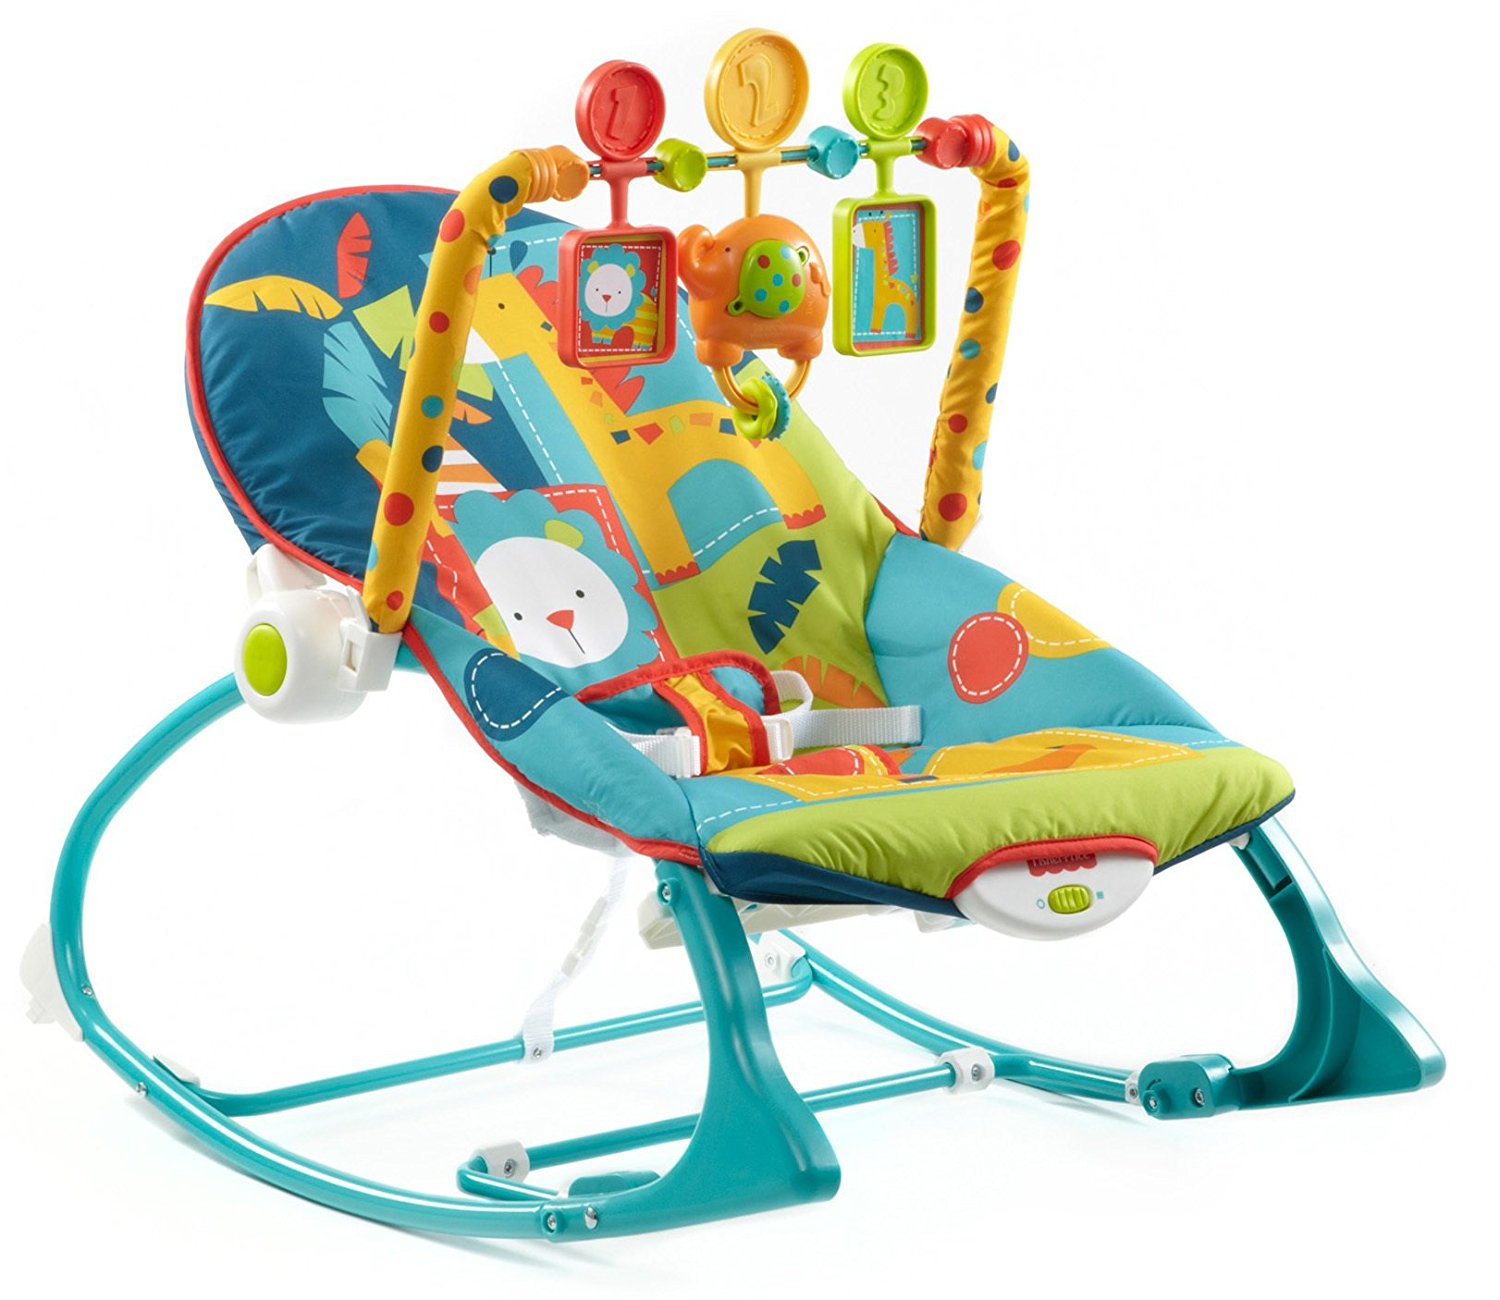 Beautiful Amazon.com : Fisher-Price Infant To Toddler Rocker, Dark Safari : Infant baby rocking chair